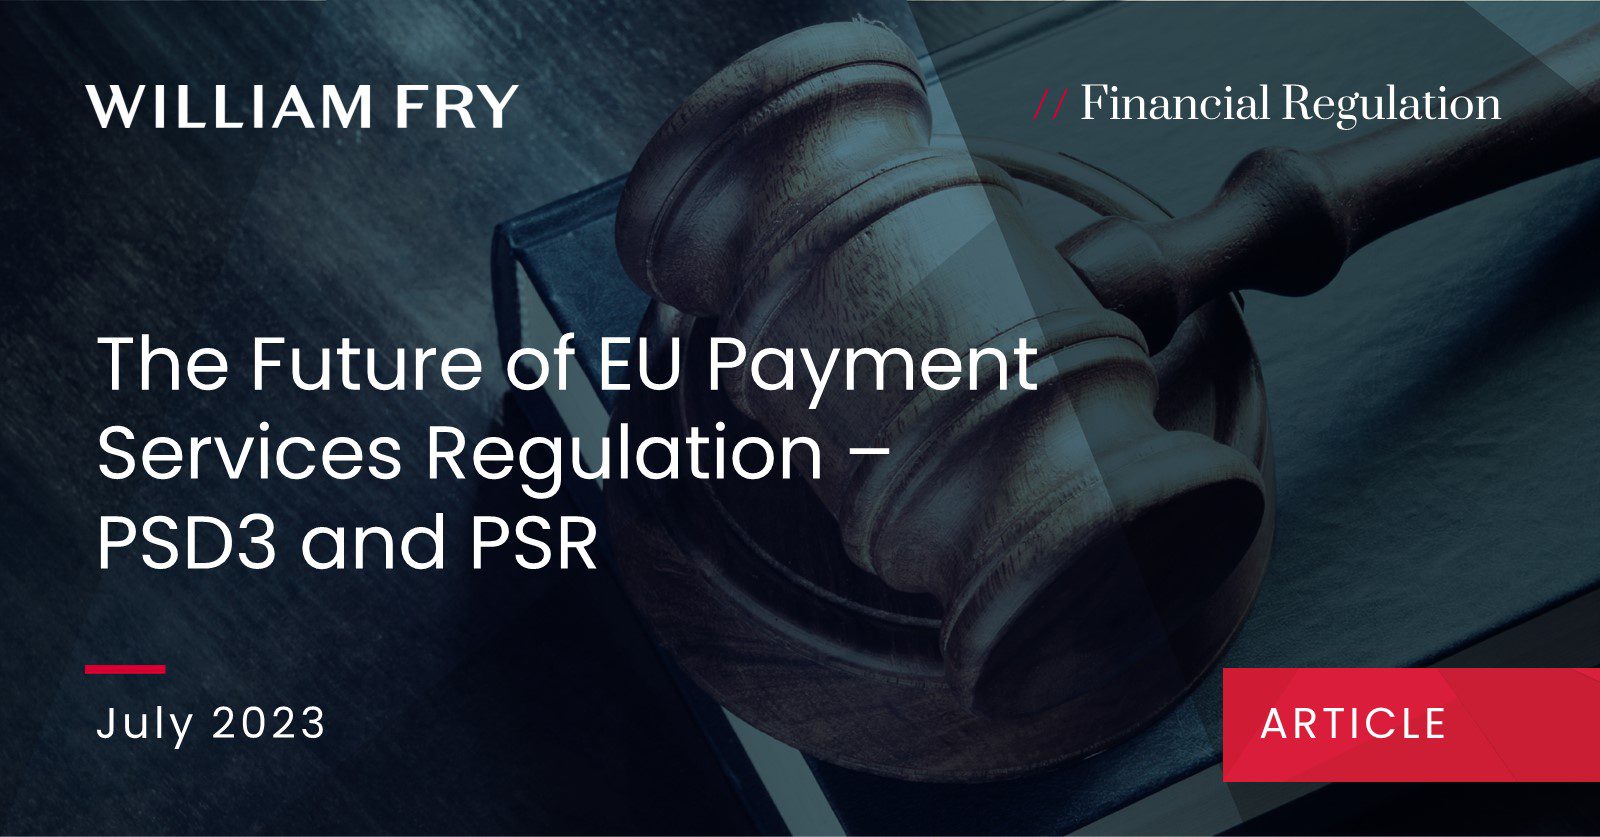 The future of EU Payment Services Regulation - PSD3 and PSR